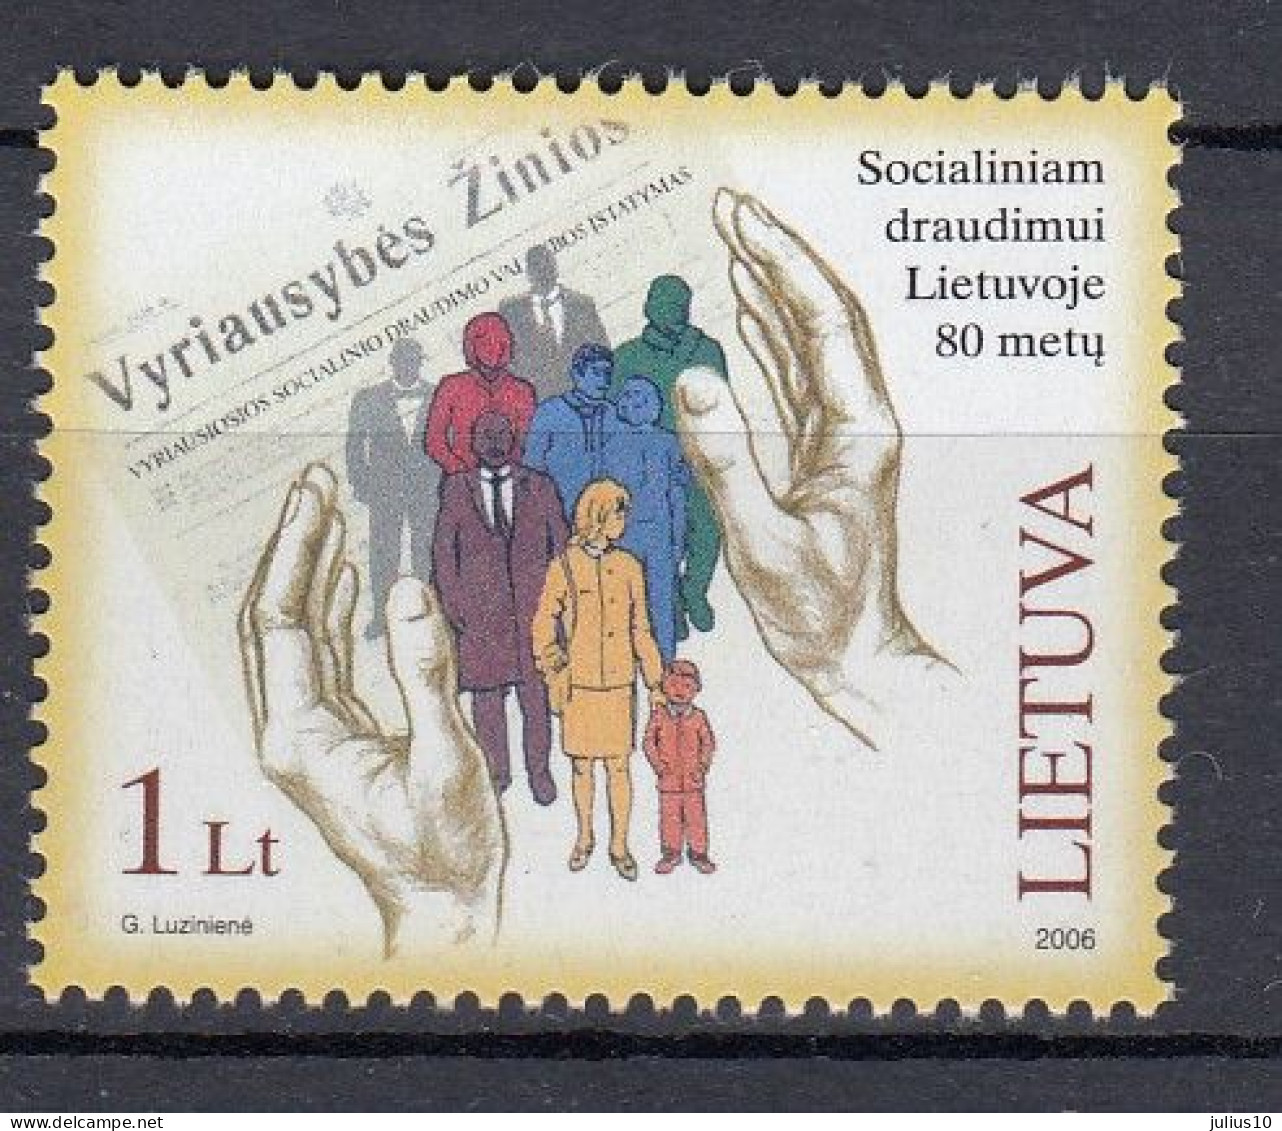 LITHUANIA 2006 Social Insurance System MNH(**) 899 #Lt966 - Lithuania